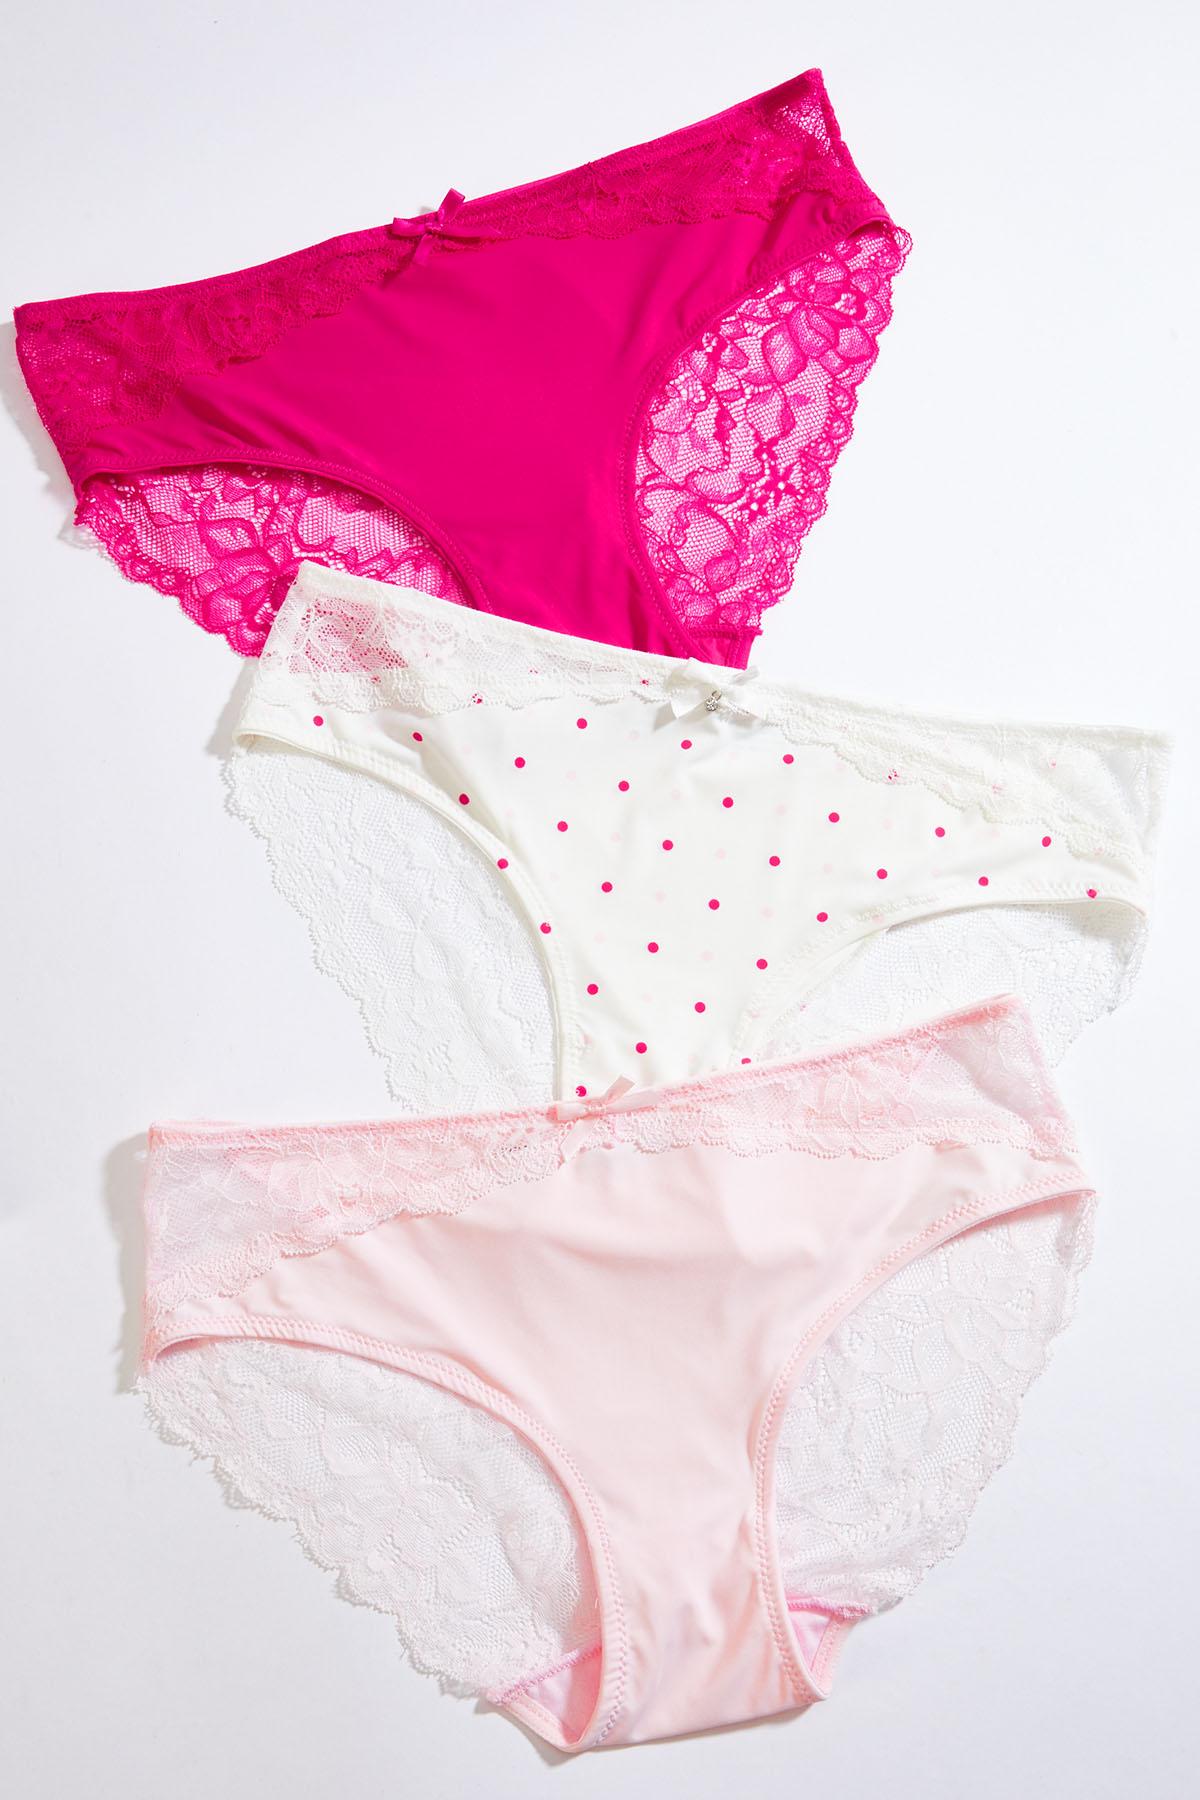 Cato Fashions  Cato Pretty In Pink Panty Set